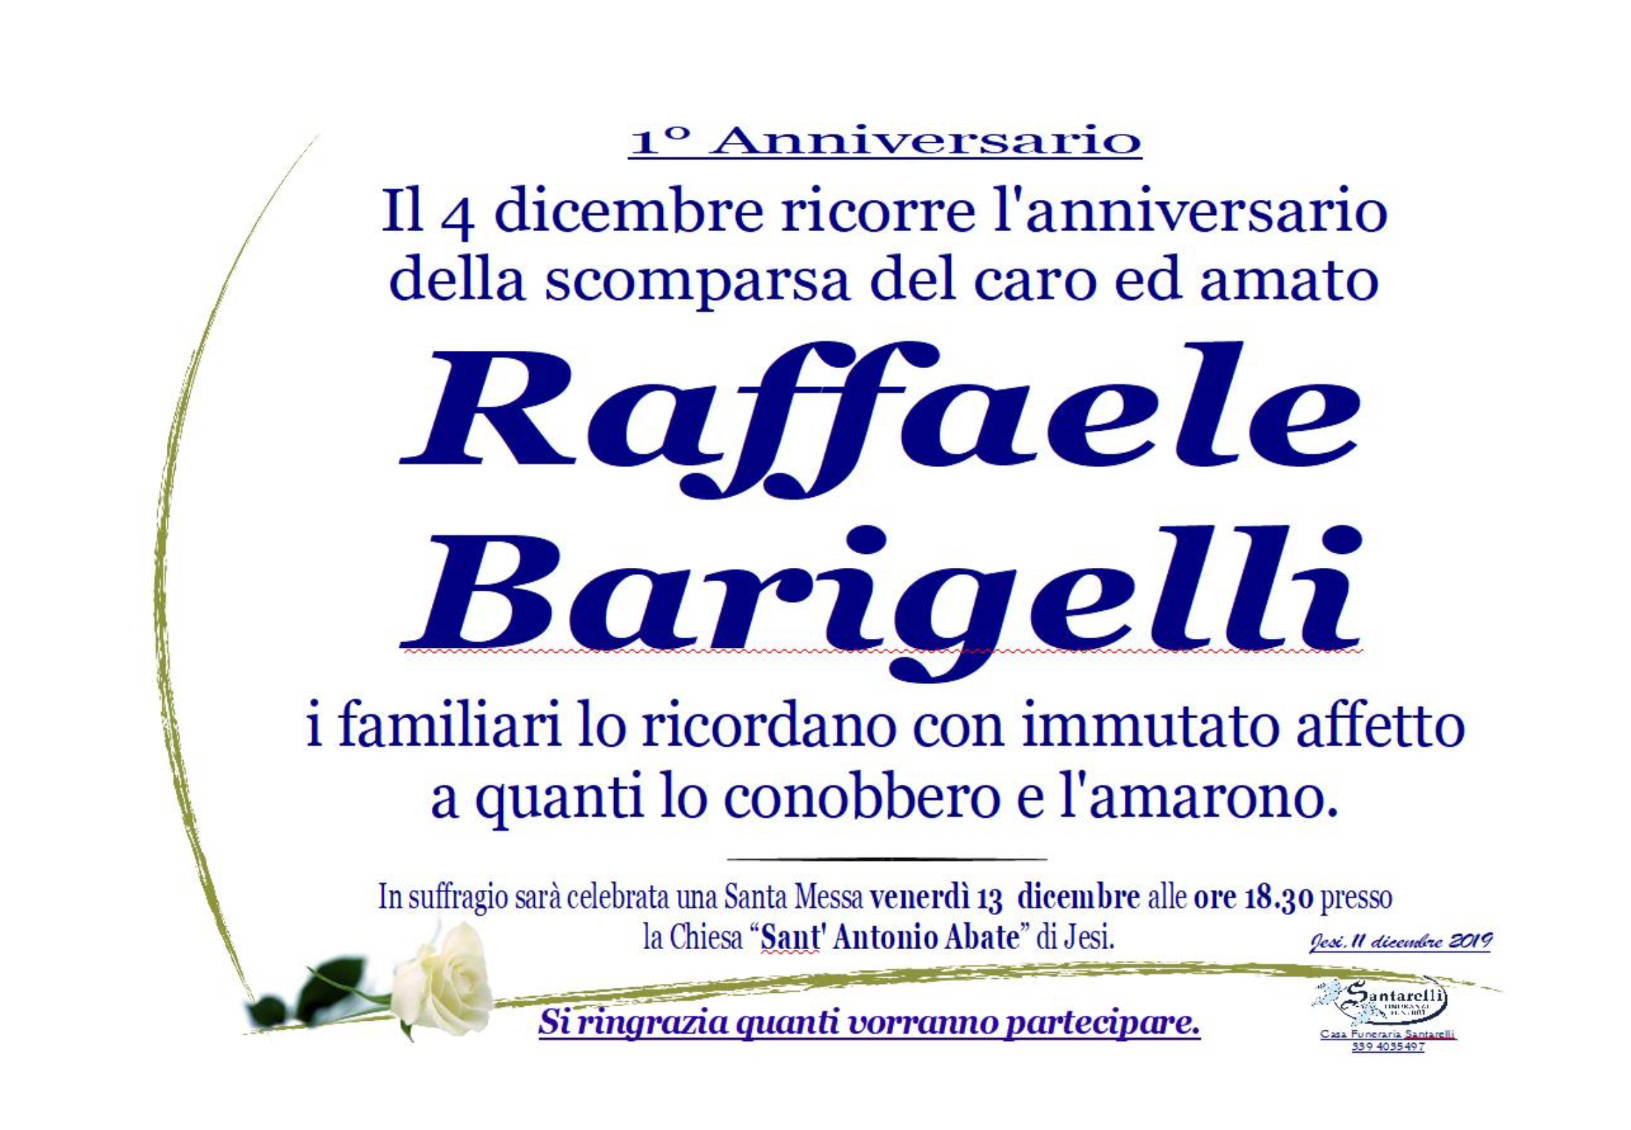 Raffaele Barigelli